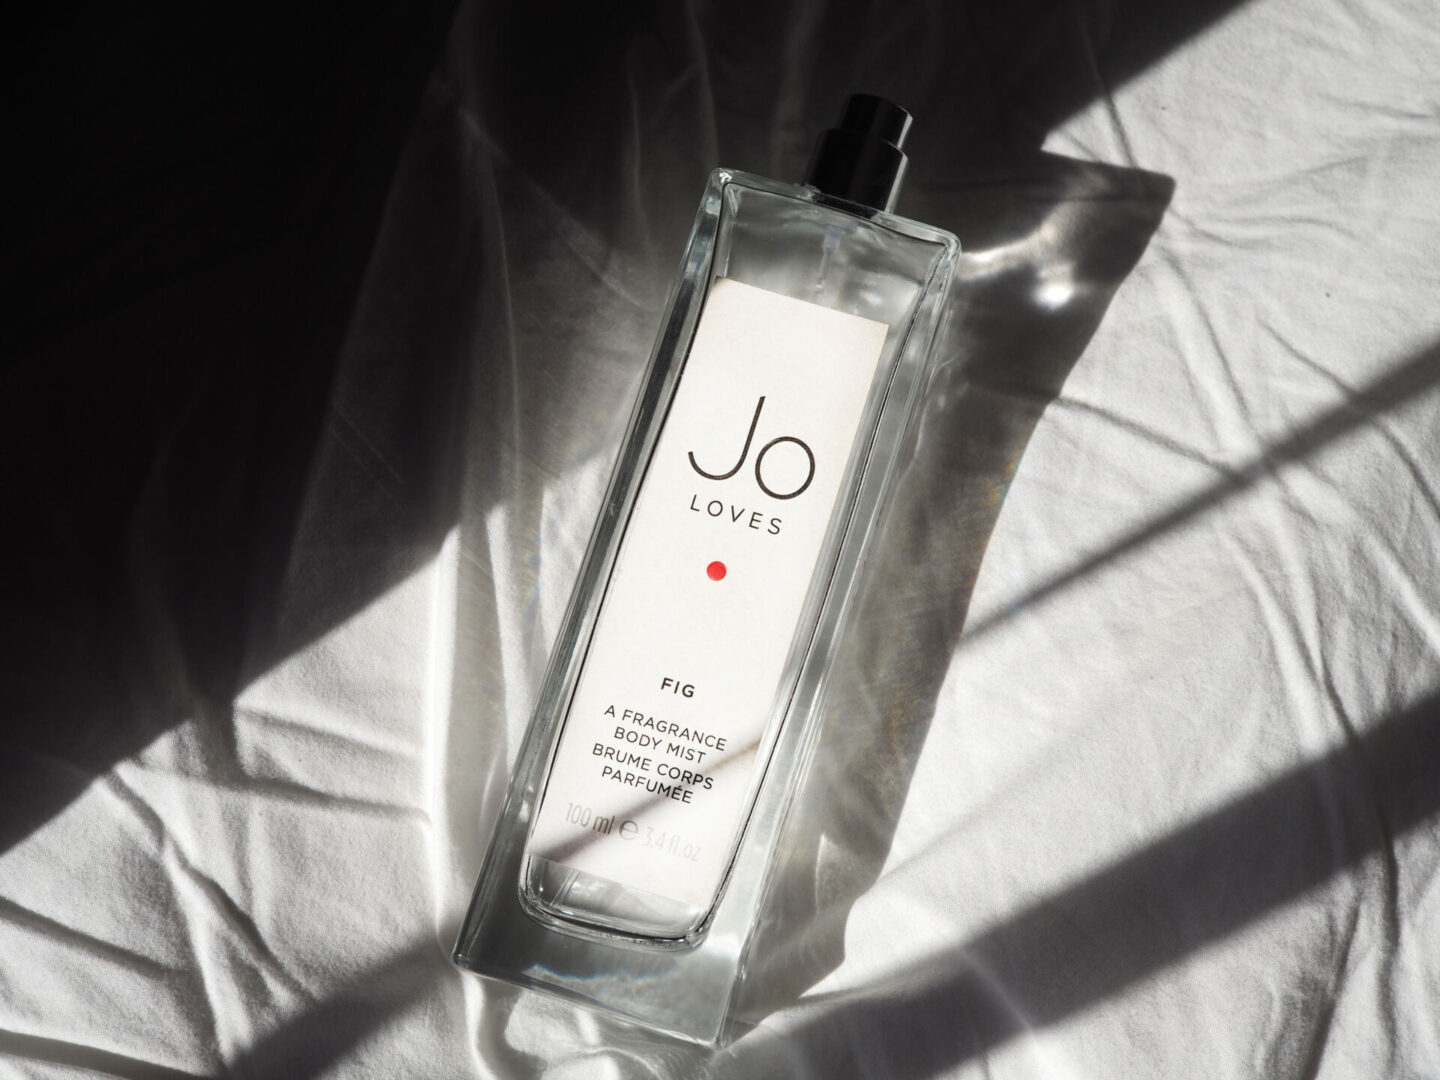 jo loves a fragrance body mist fig review